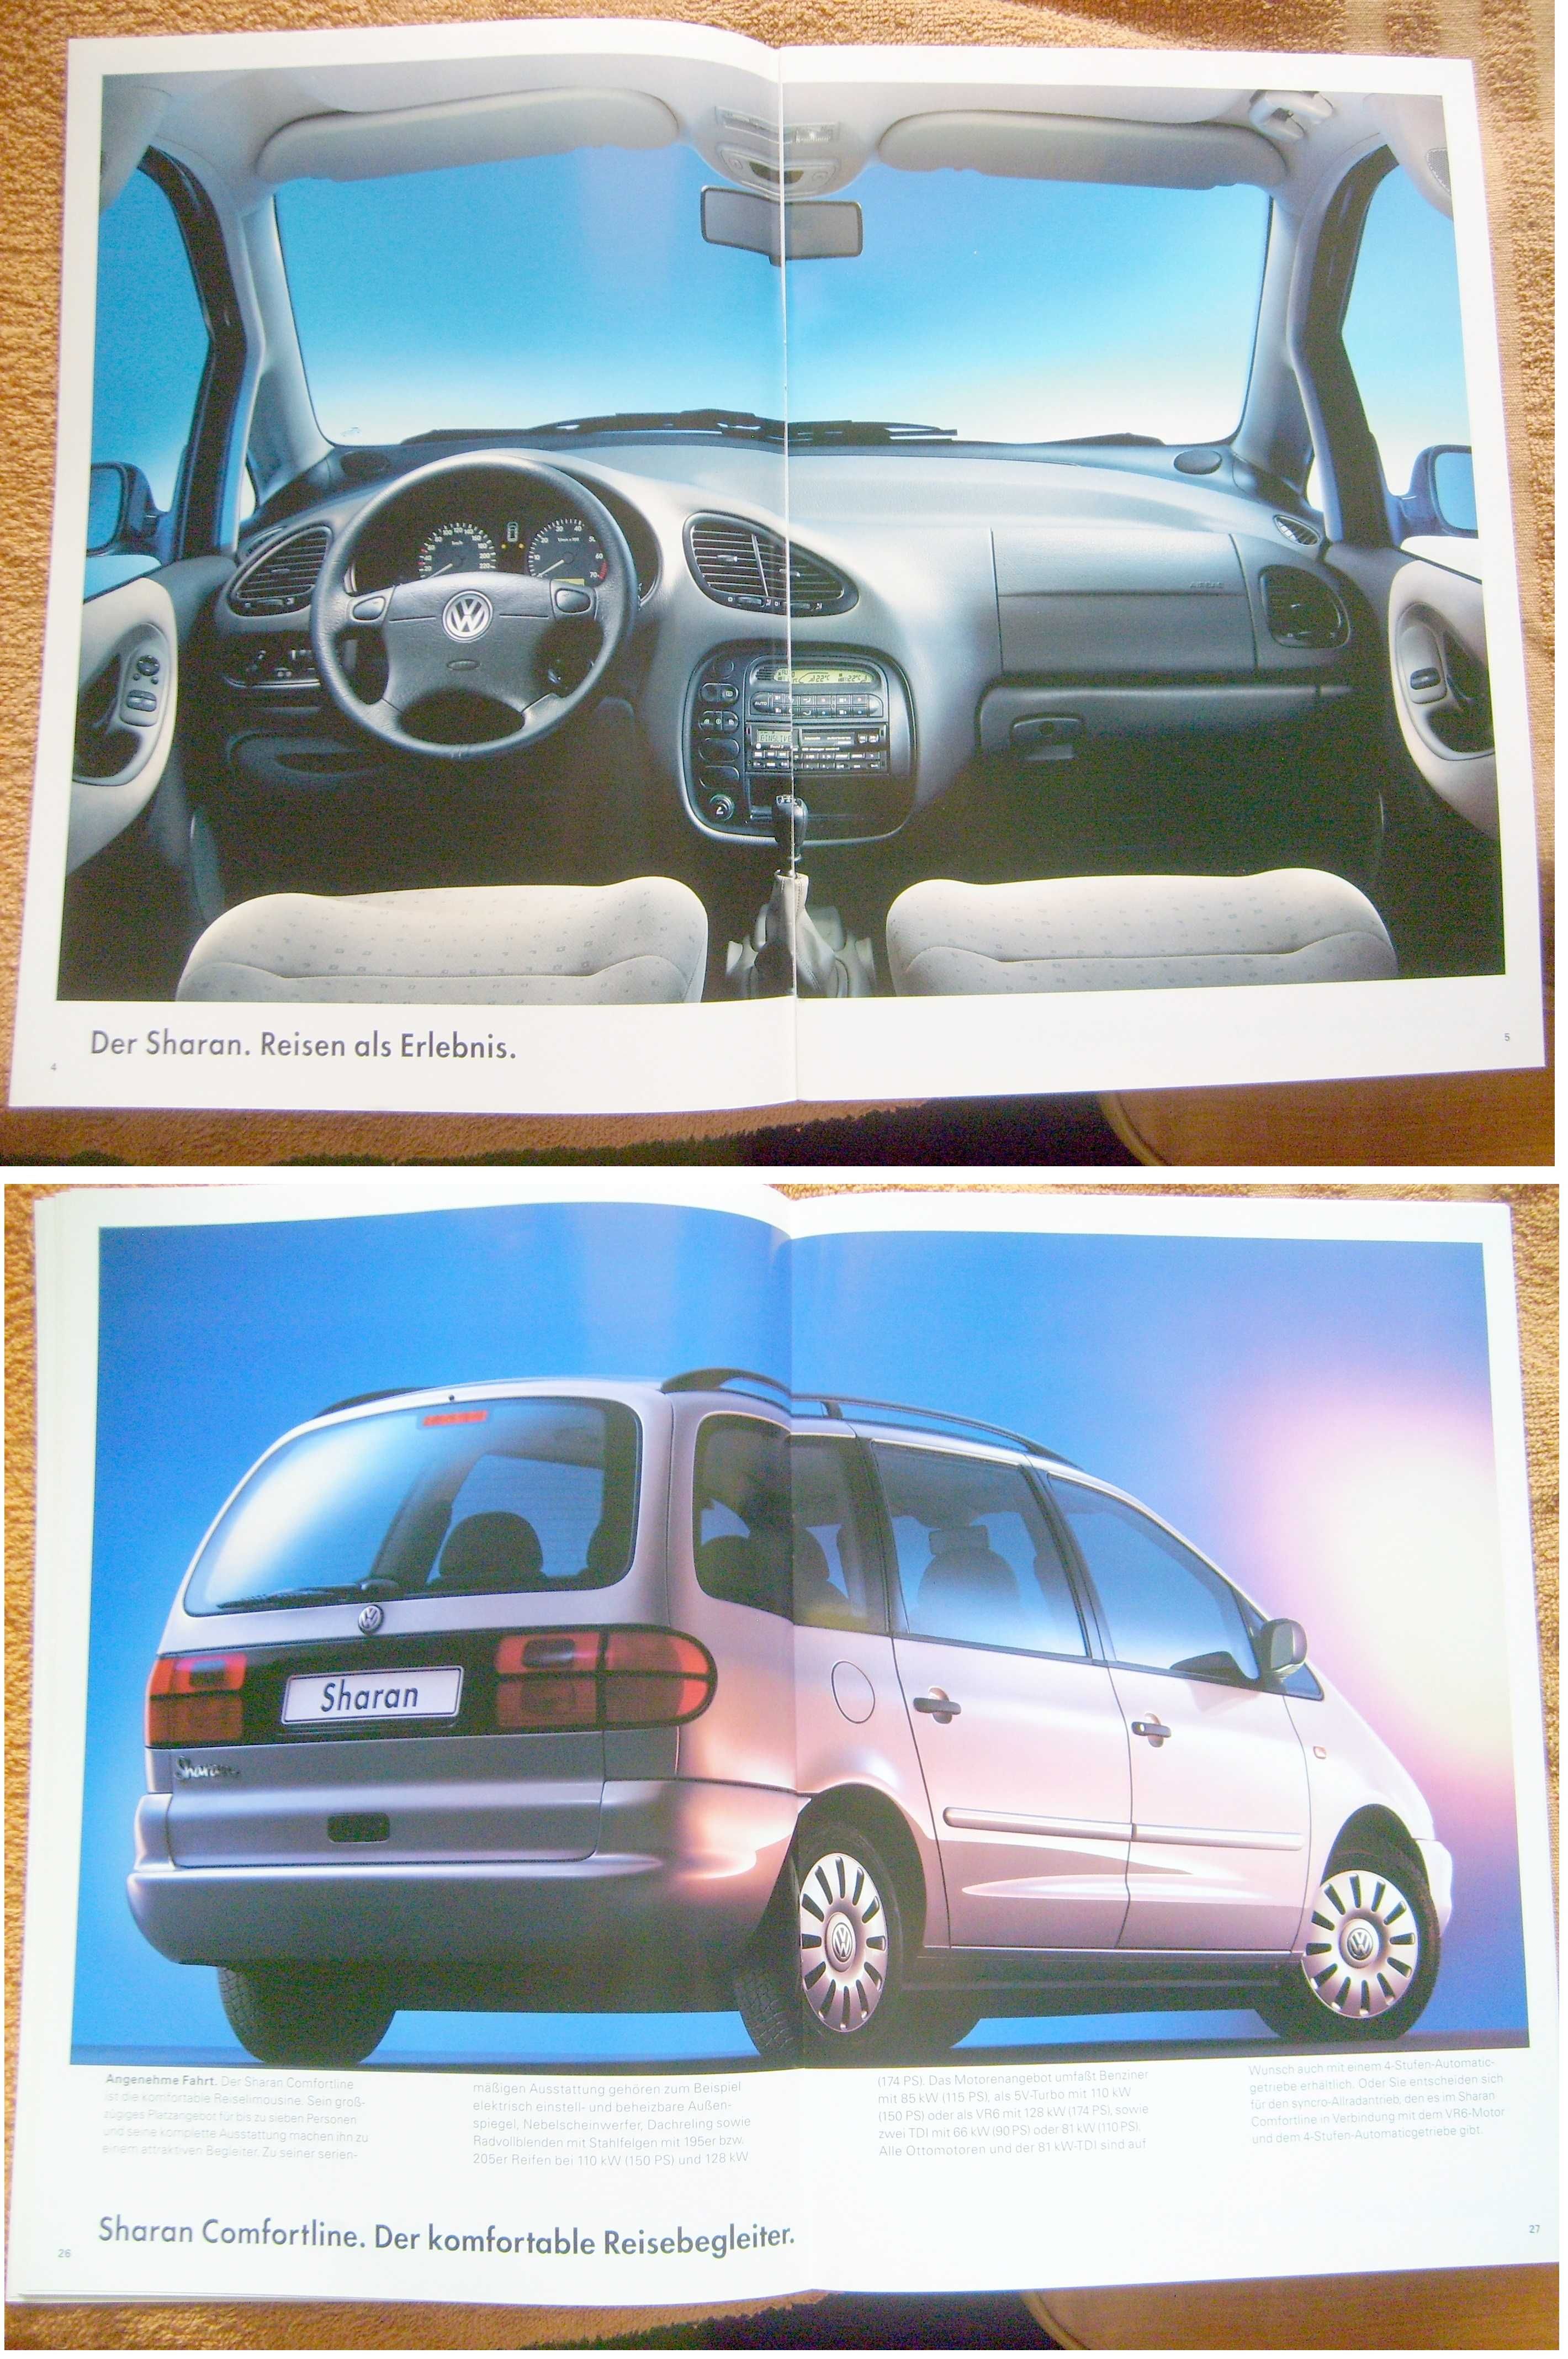 VW Volkswagen Sharan 1998 / obszerny prospekt 60 stron, stan BDB